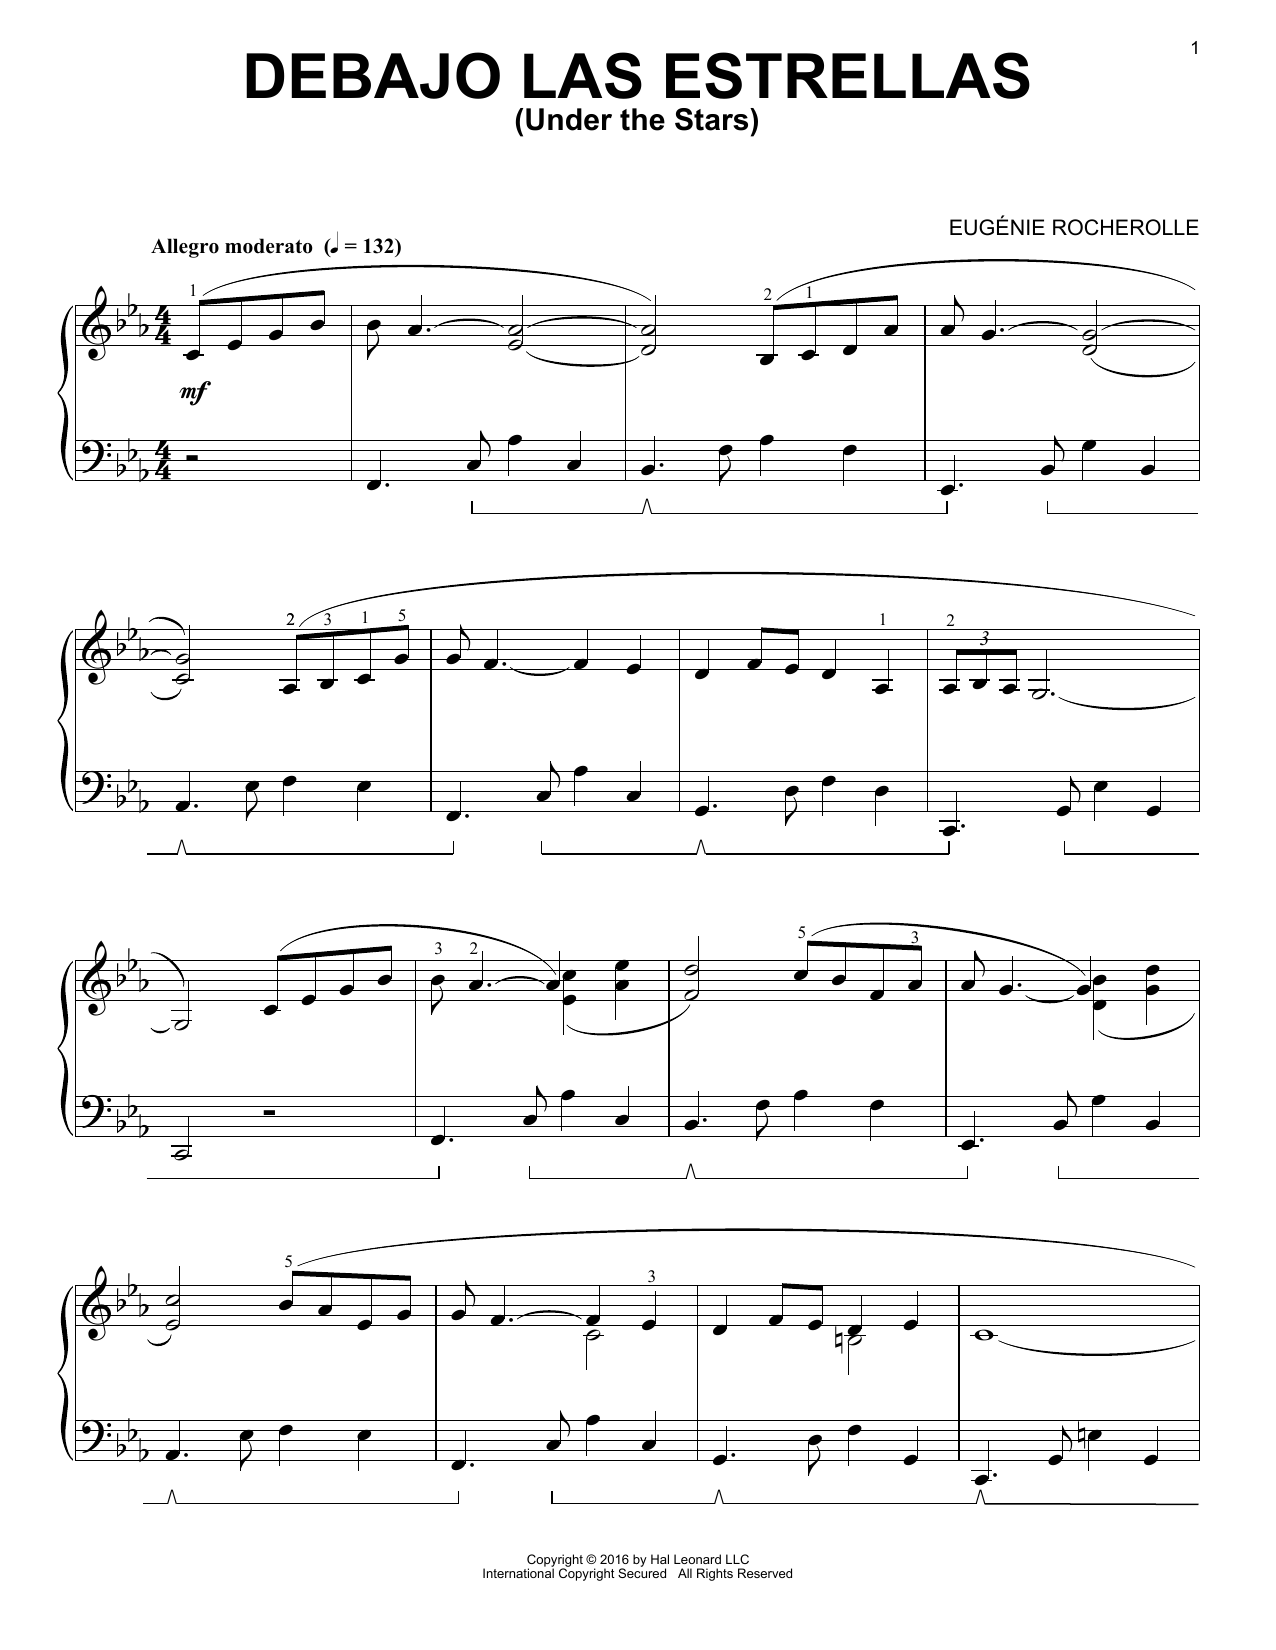 Eugénie Rocherolle Debajo Las Estrellas Sheet Music Notes & Chords for Piano - Download or Print PDF